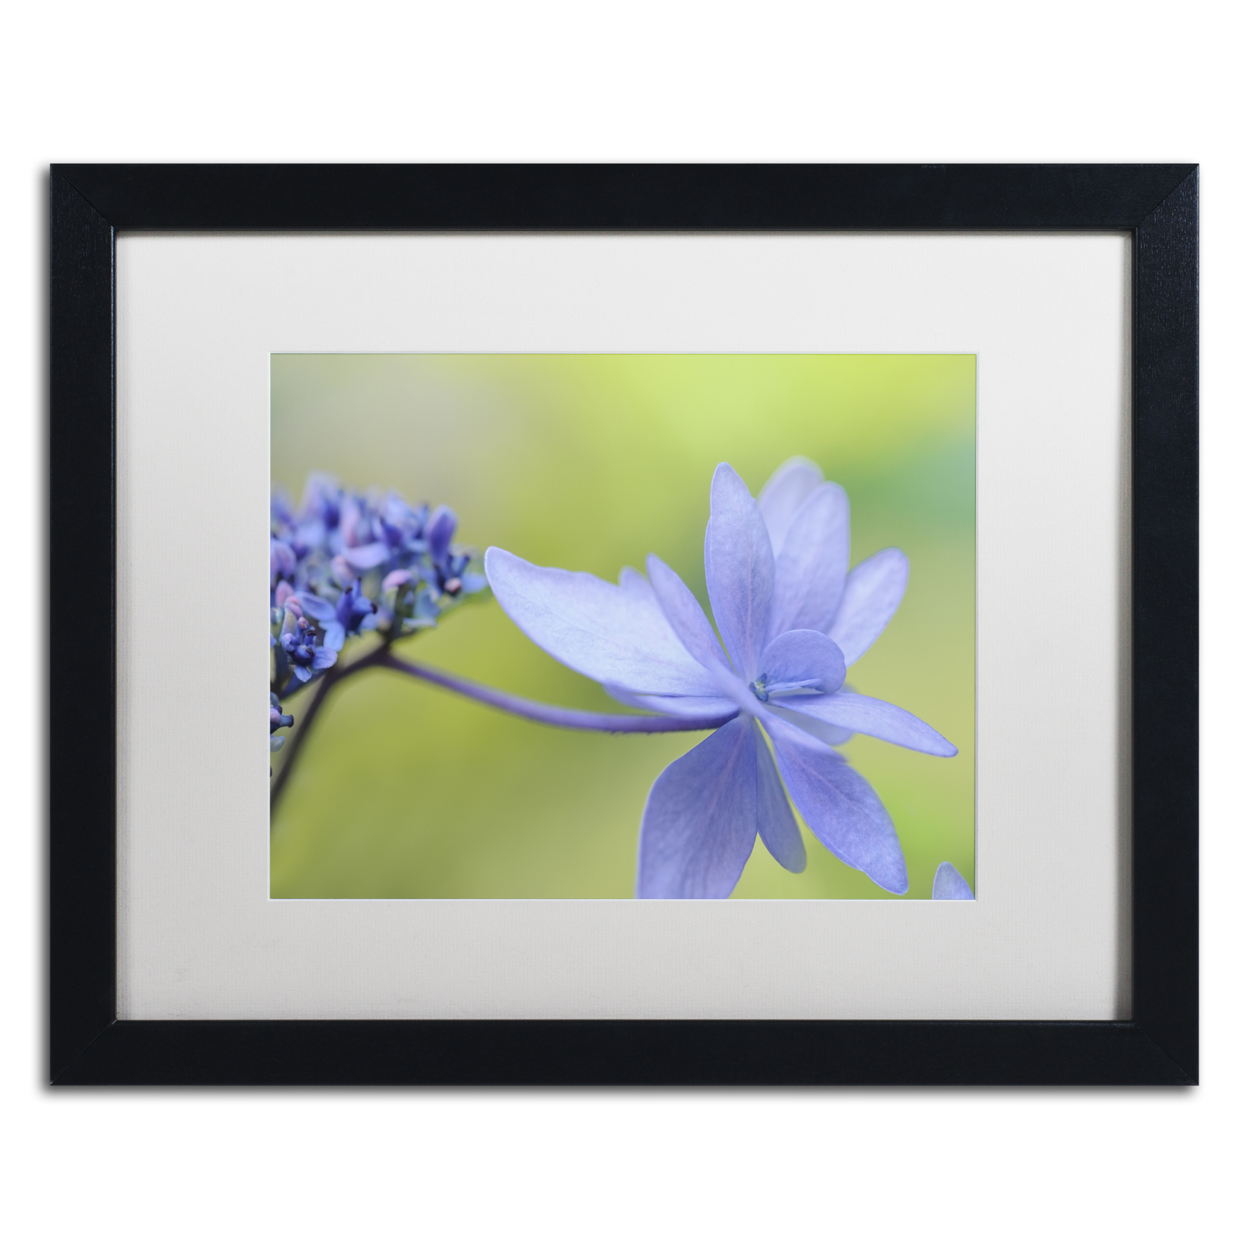 Cora Niele 'Blue Hydrangea' Black Wooden Framed Art 18 X 22 Inches